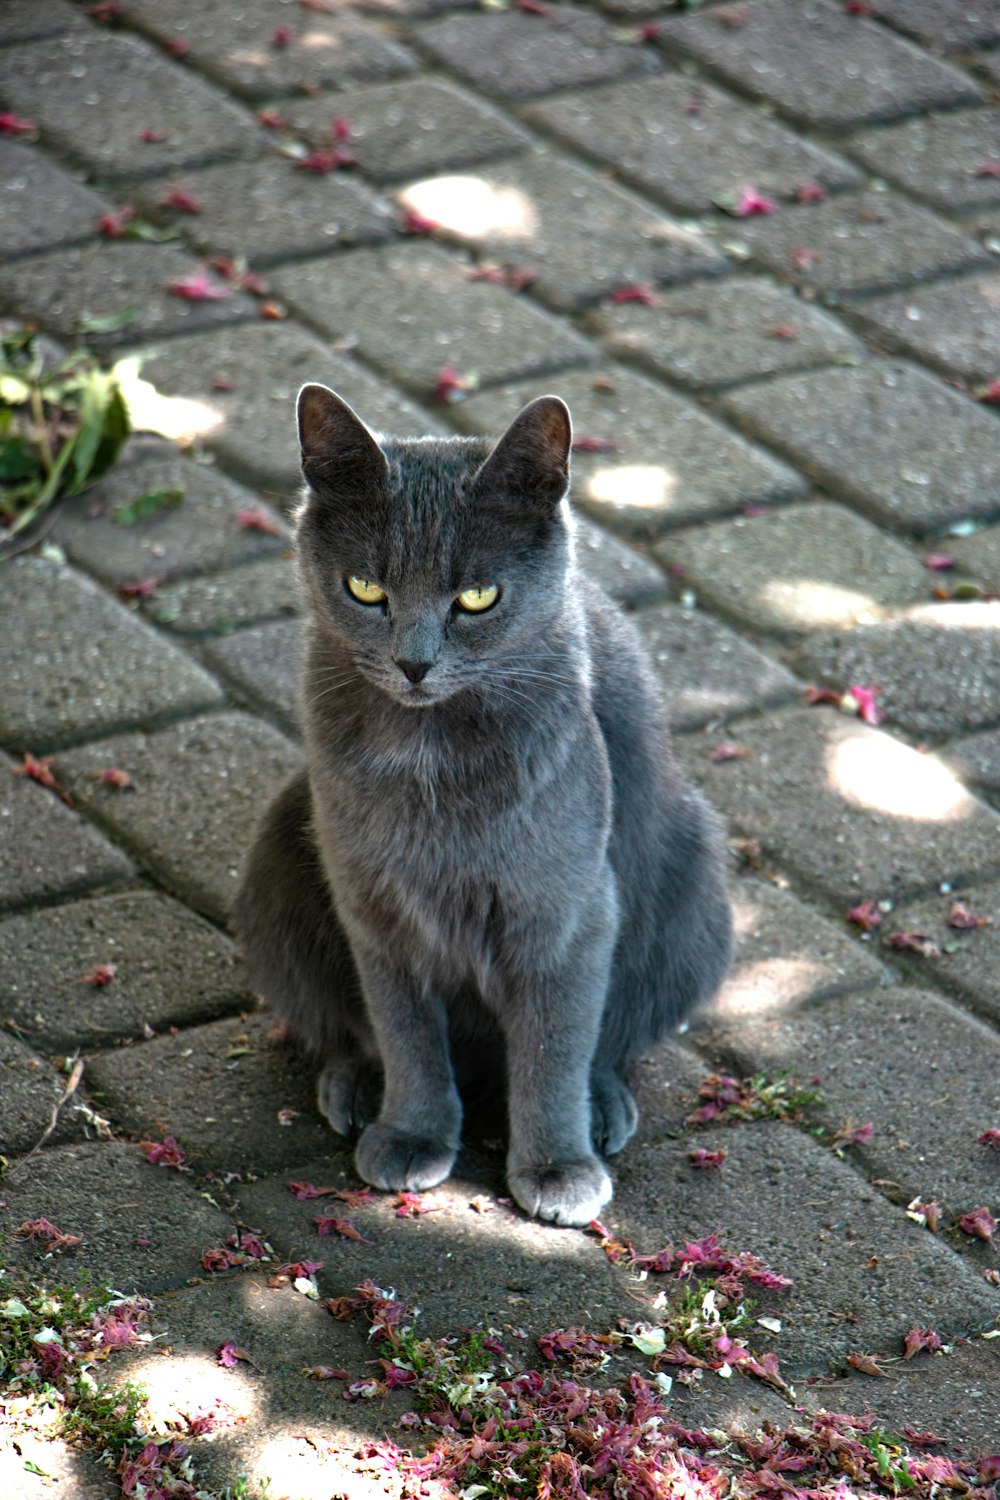 a gray cat sitting on a brick walkway